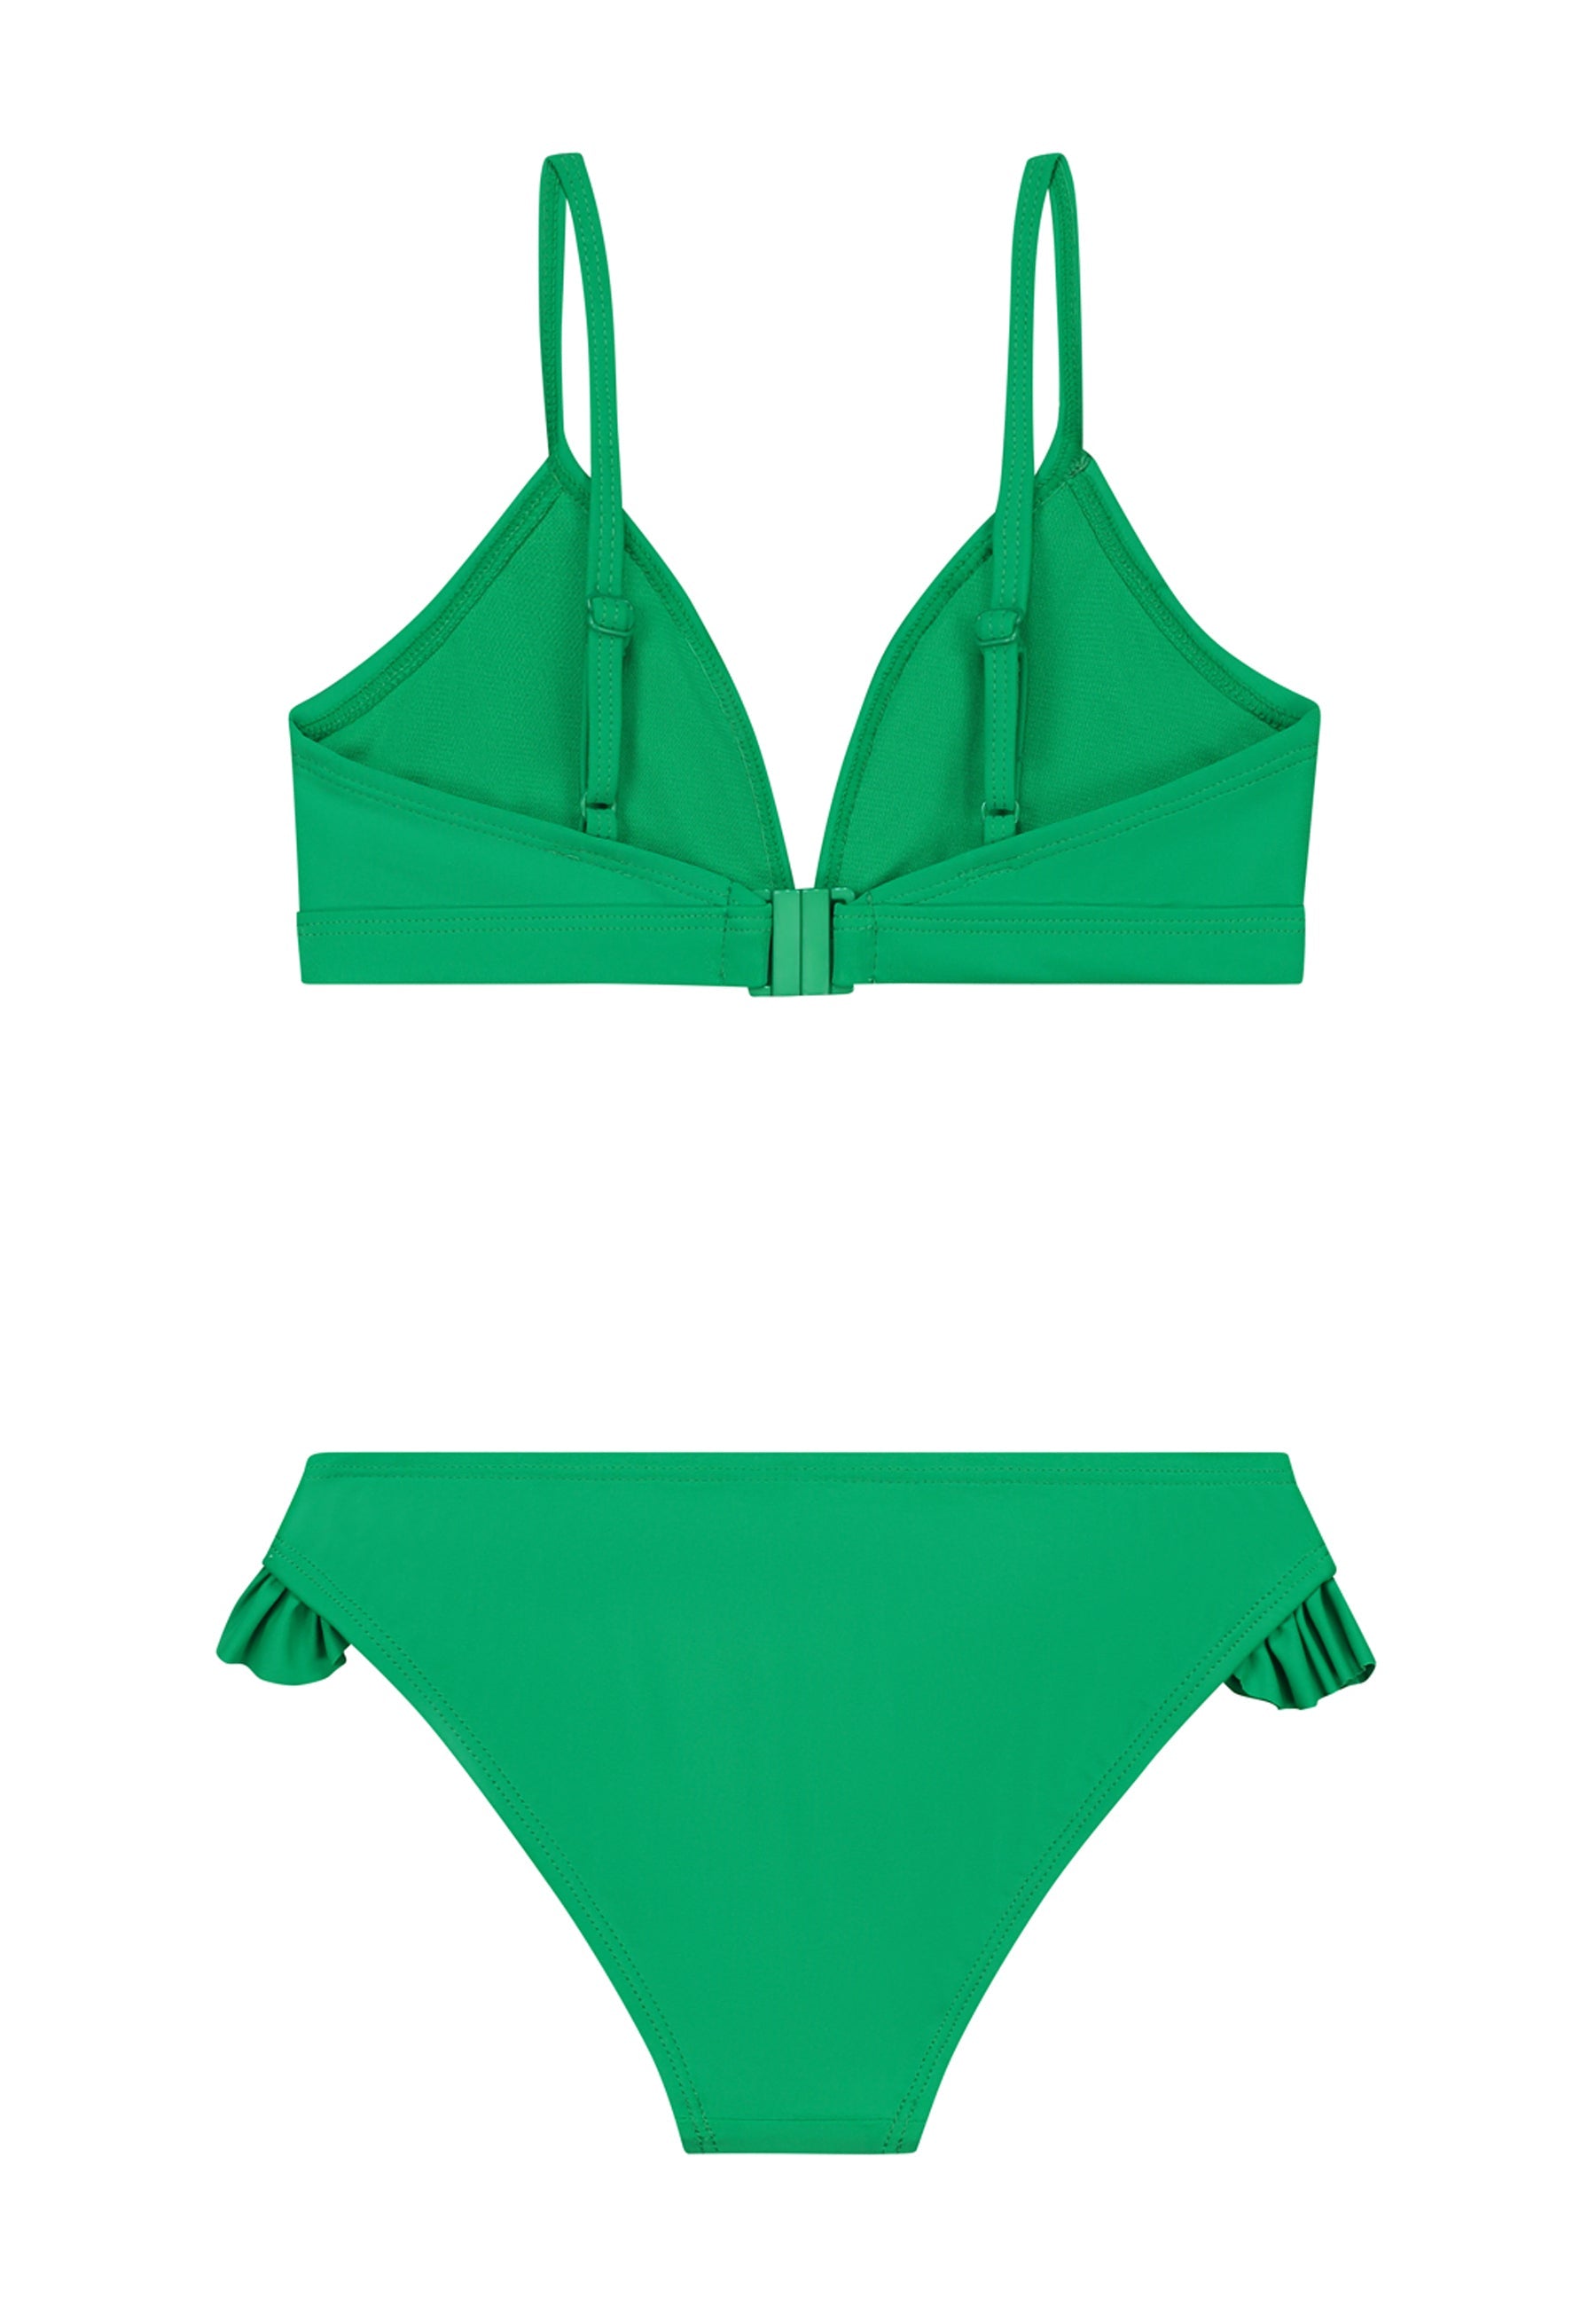 Meisjes BLAKE bikini set van Shiwi in de kleur tropic green in maat 170-176.